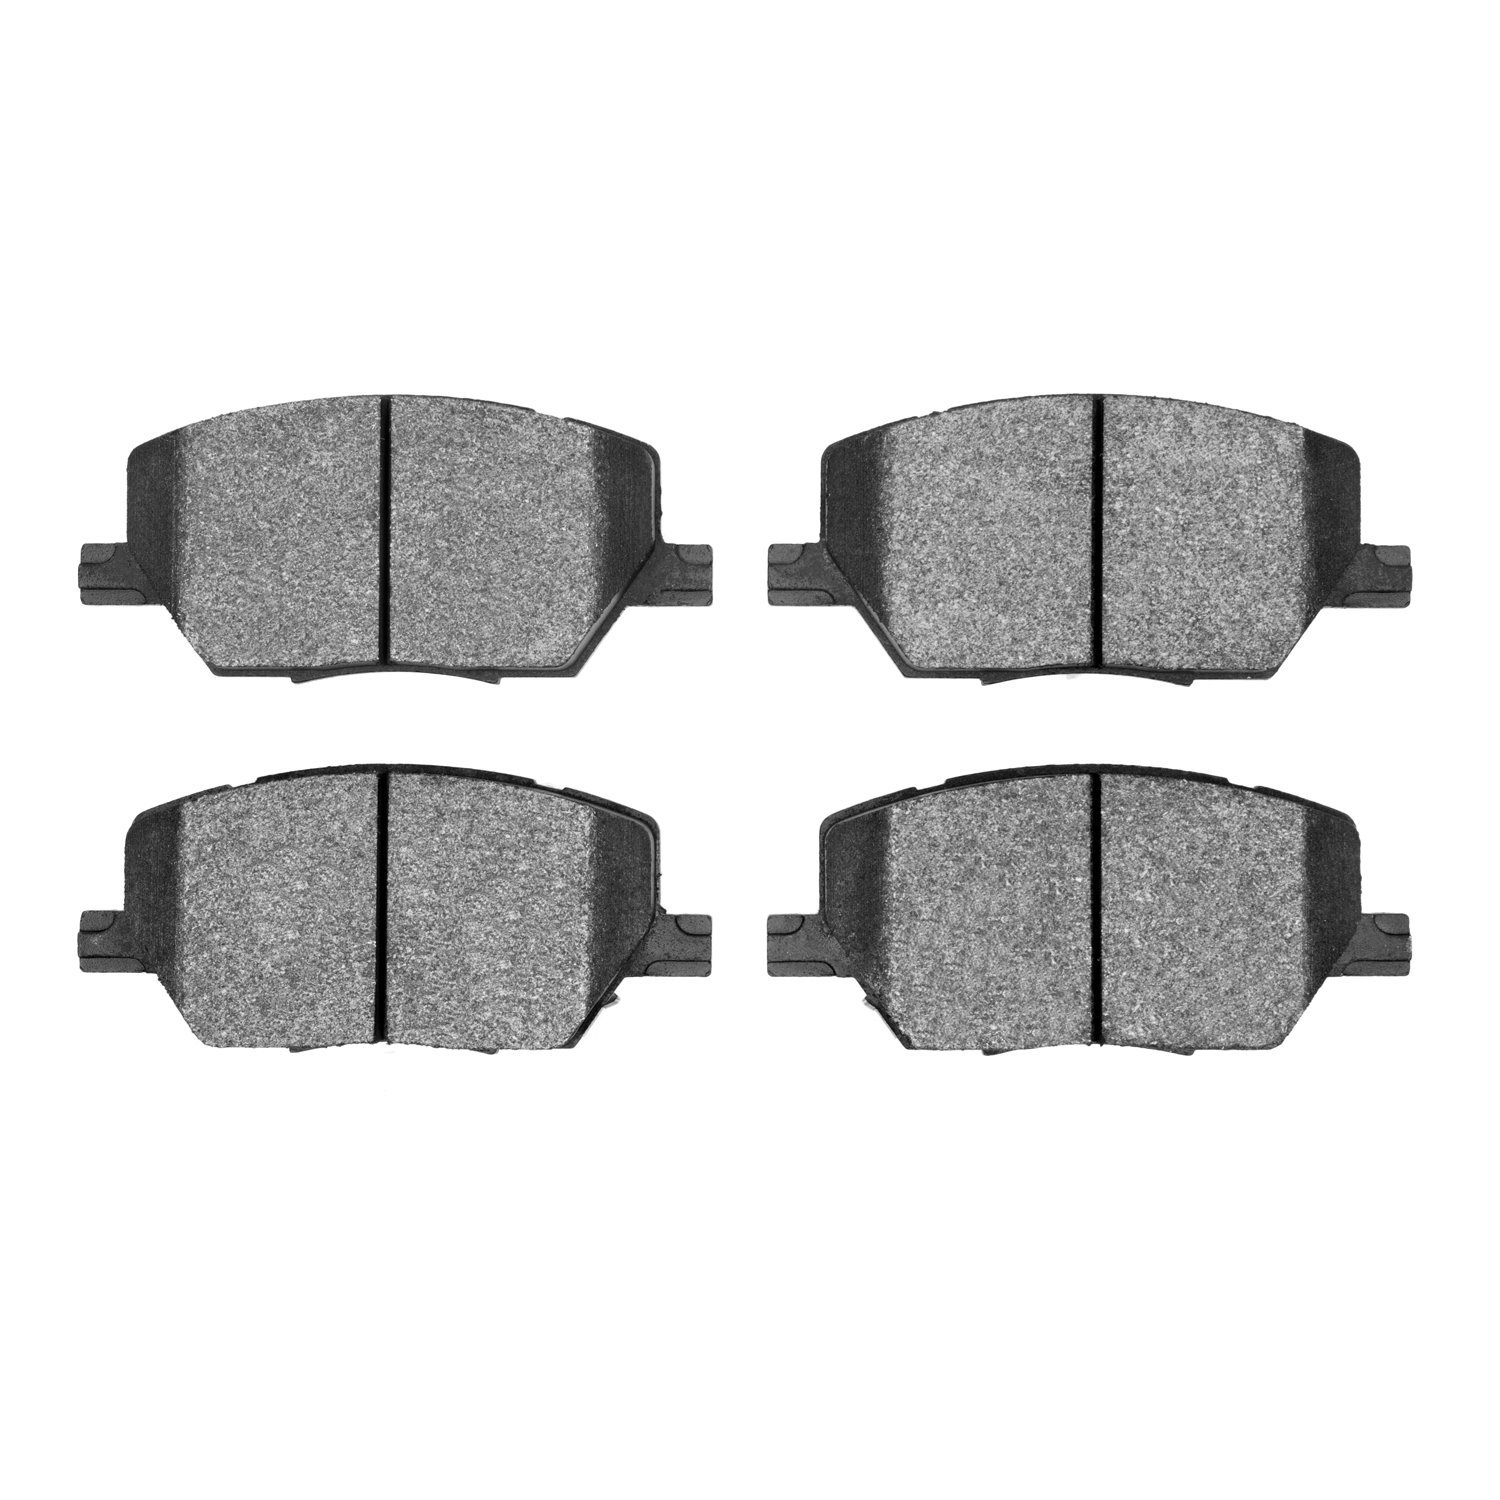 1551-1811-00 5000 Advanced Ceramic Brake Pads, Fits Select Mopar, Position: Front